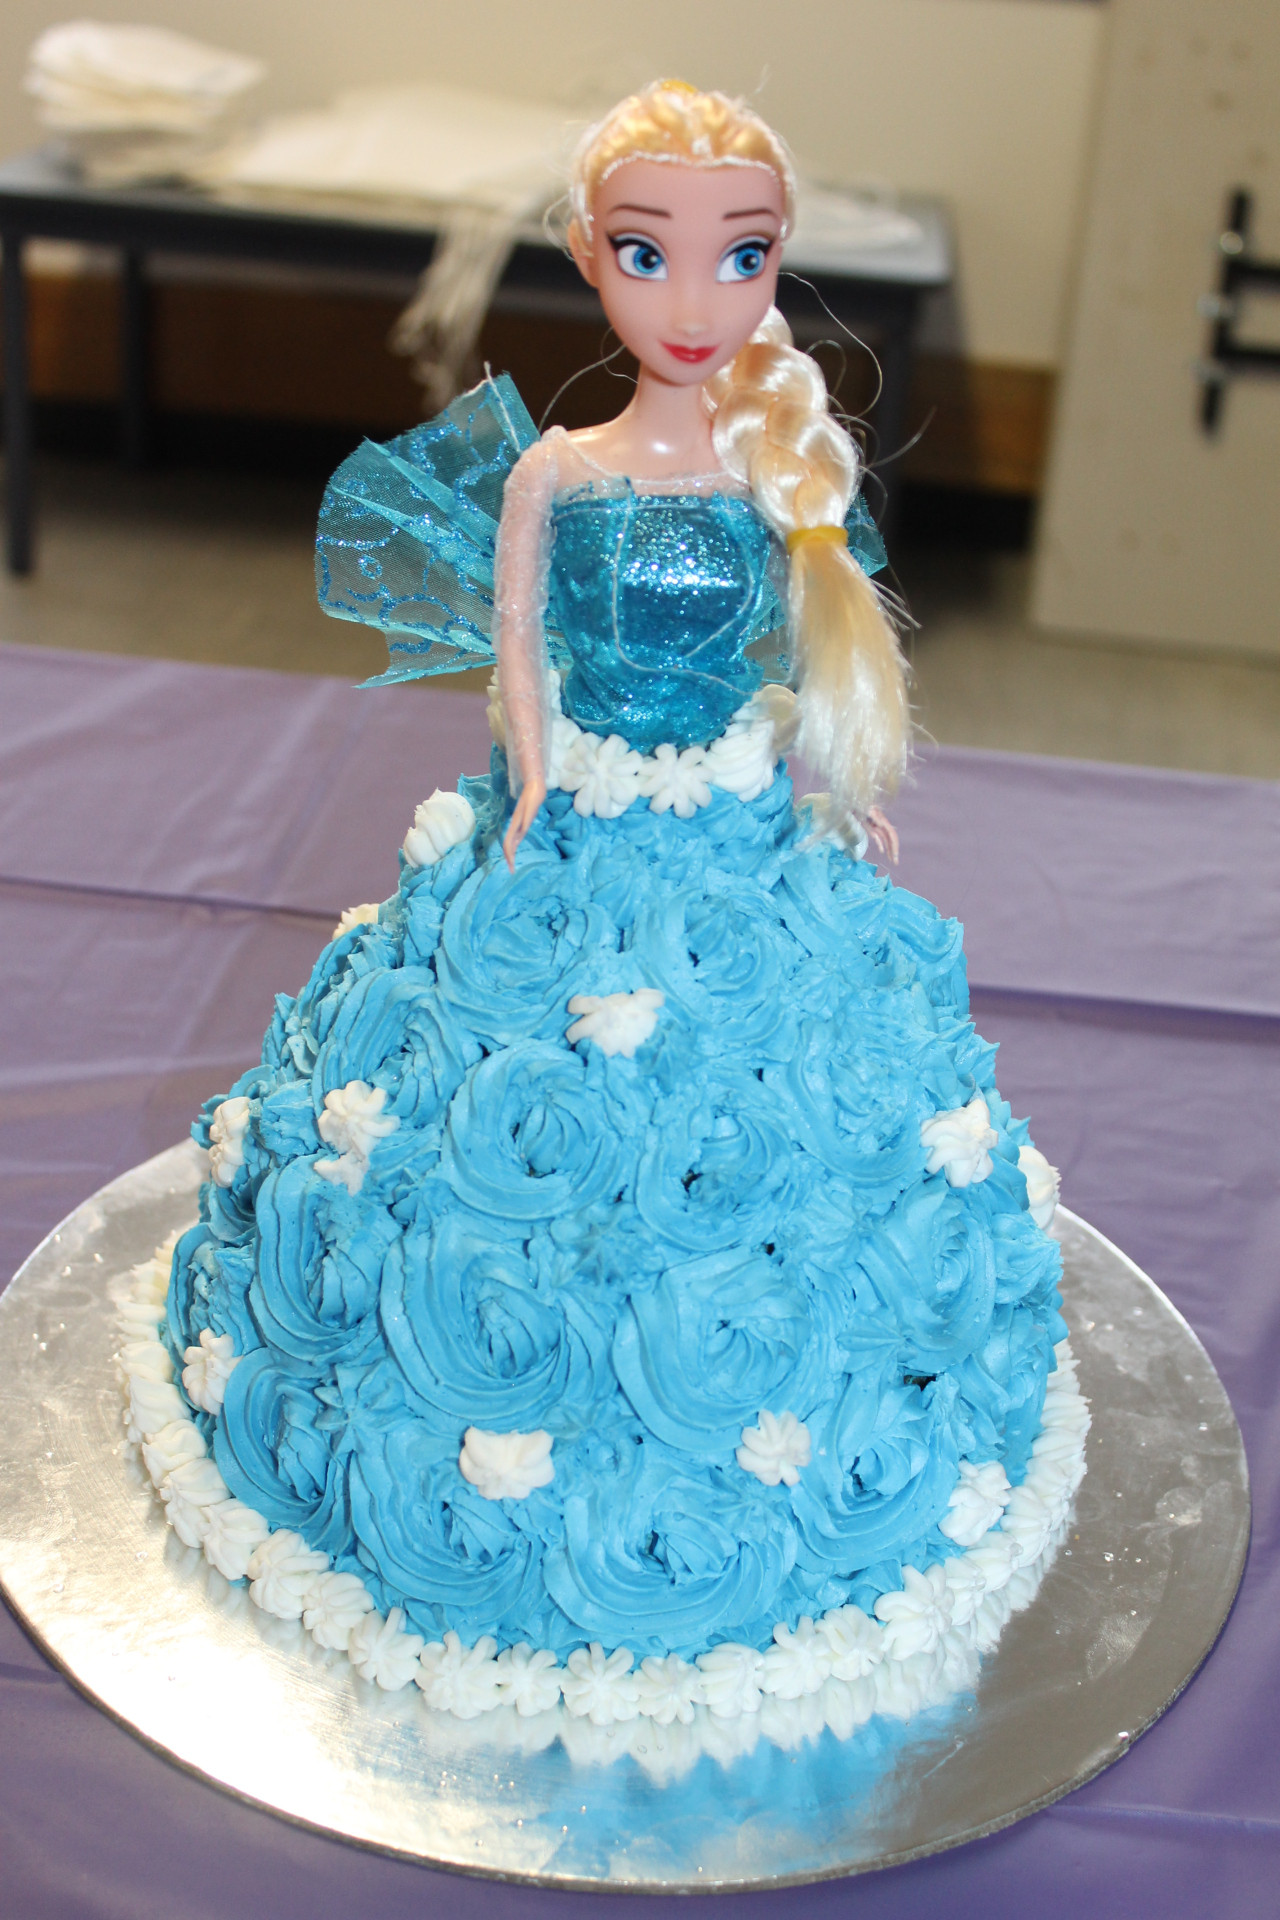 Frozen Birthday Cakes Images
 Frozen Cake – Elsa & Anna